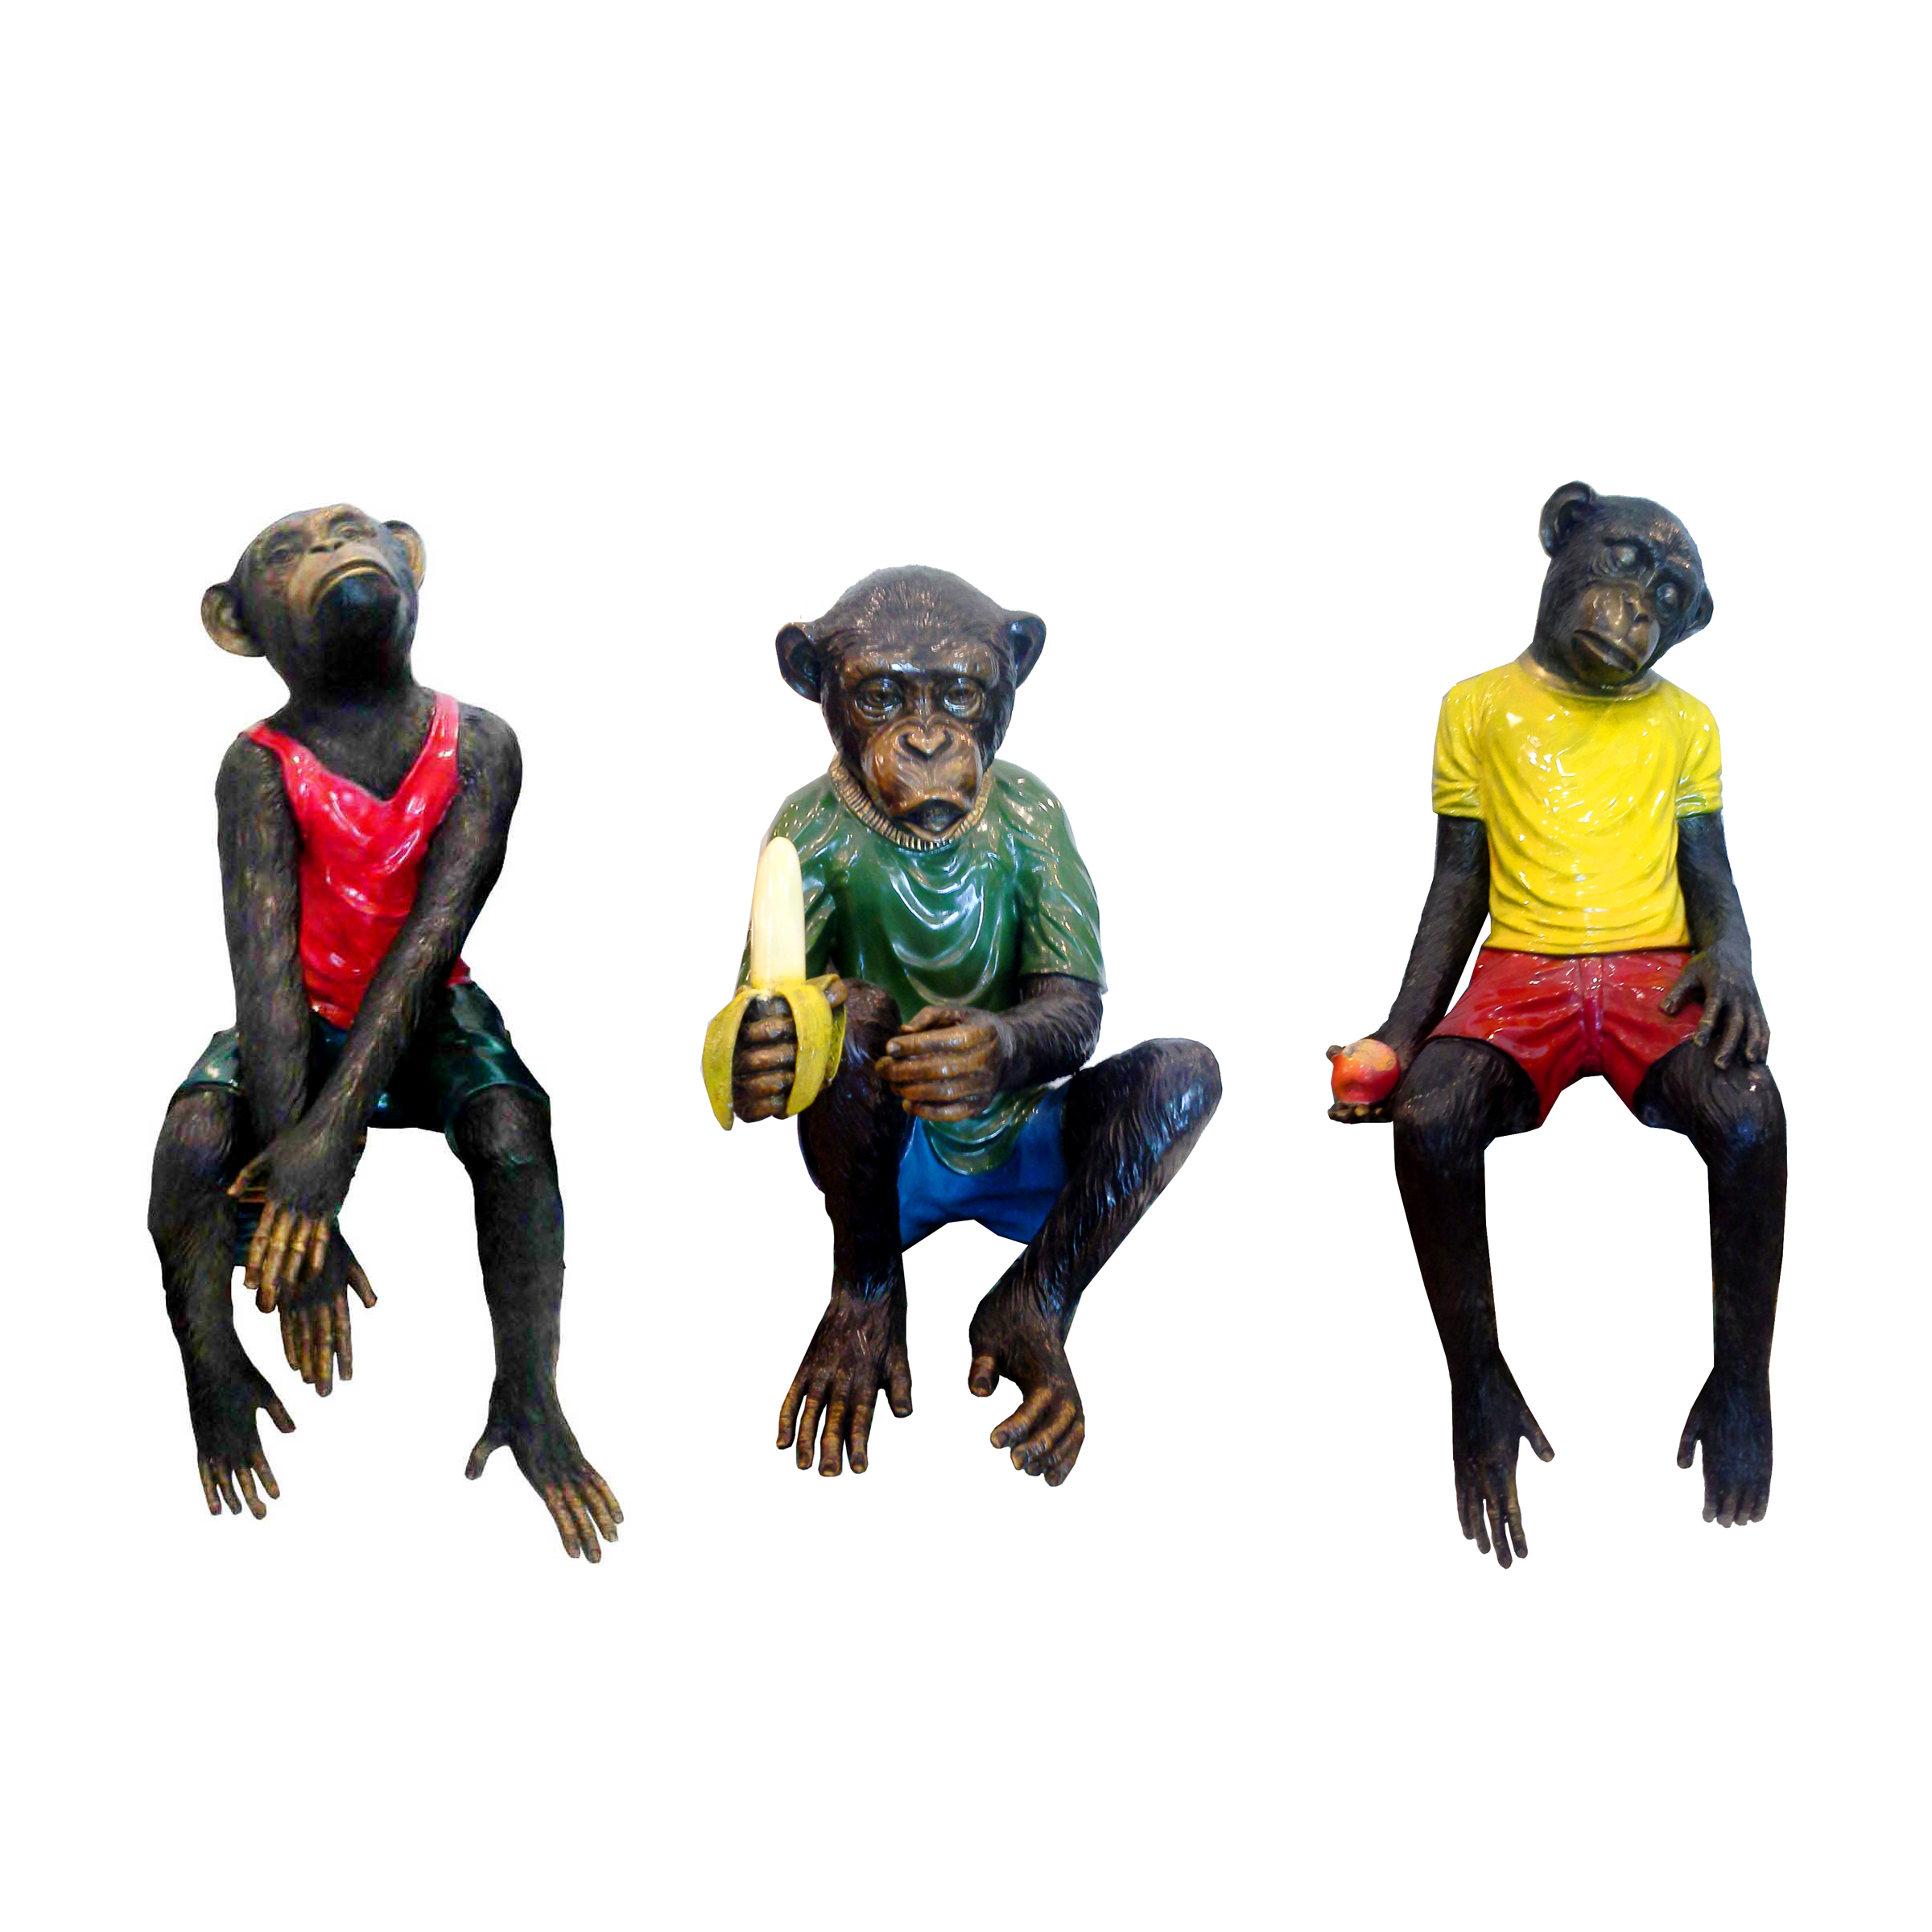 SRB7077372-73-95 Bronze Monkeys in Street Clothes Sculpture Set by Metropolitan Galleries Inc